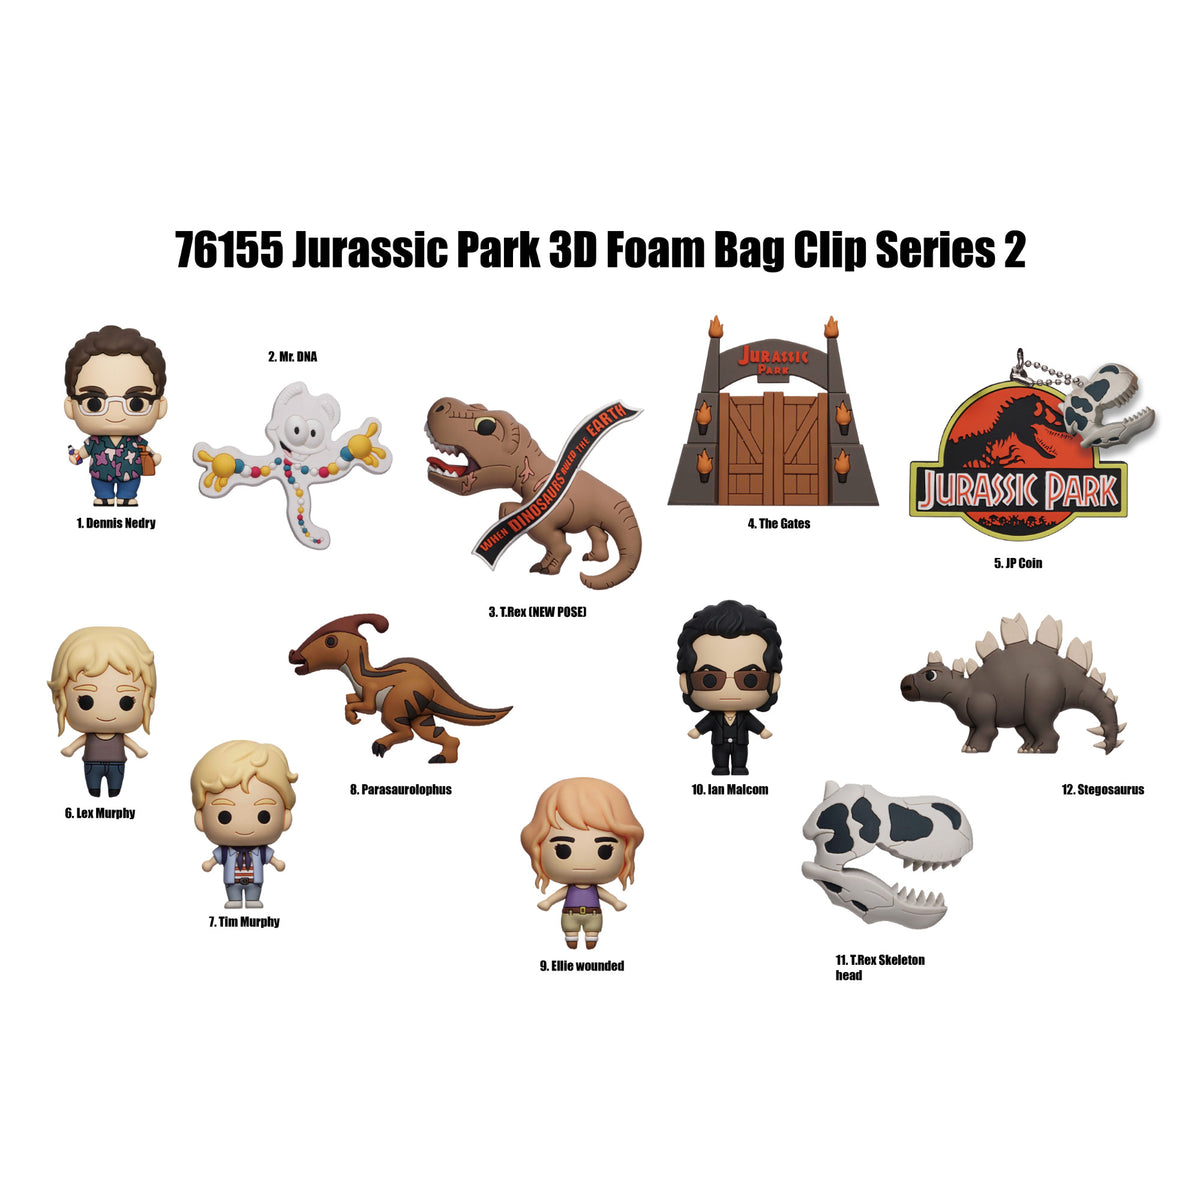 Jurassic Park 3D Foam Mystery Bag Clip Series 2